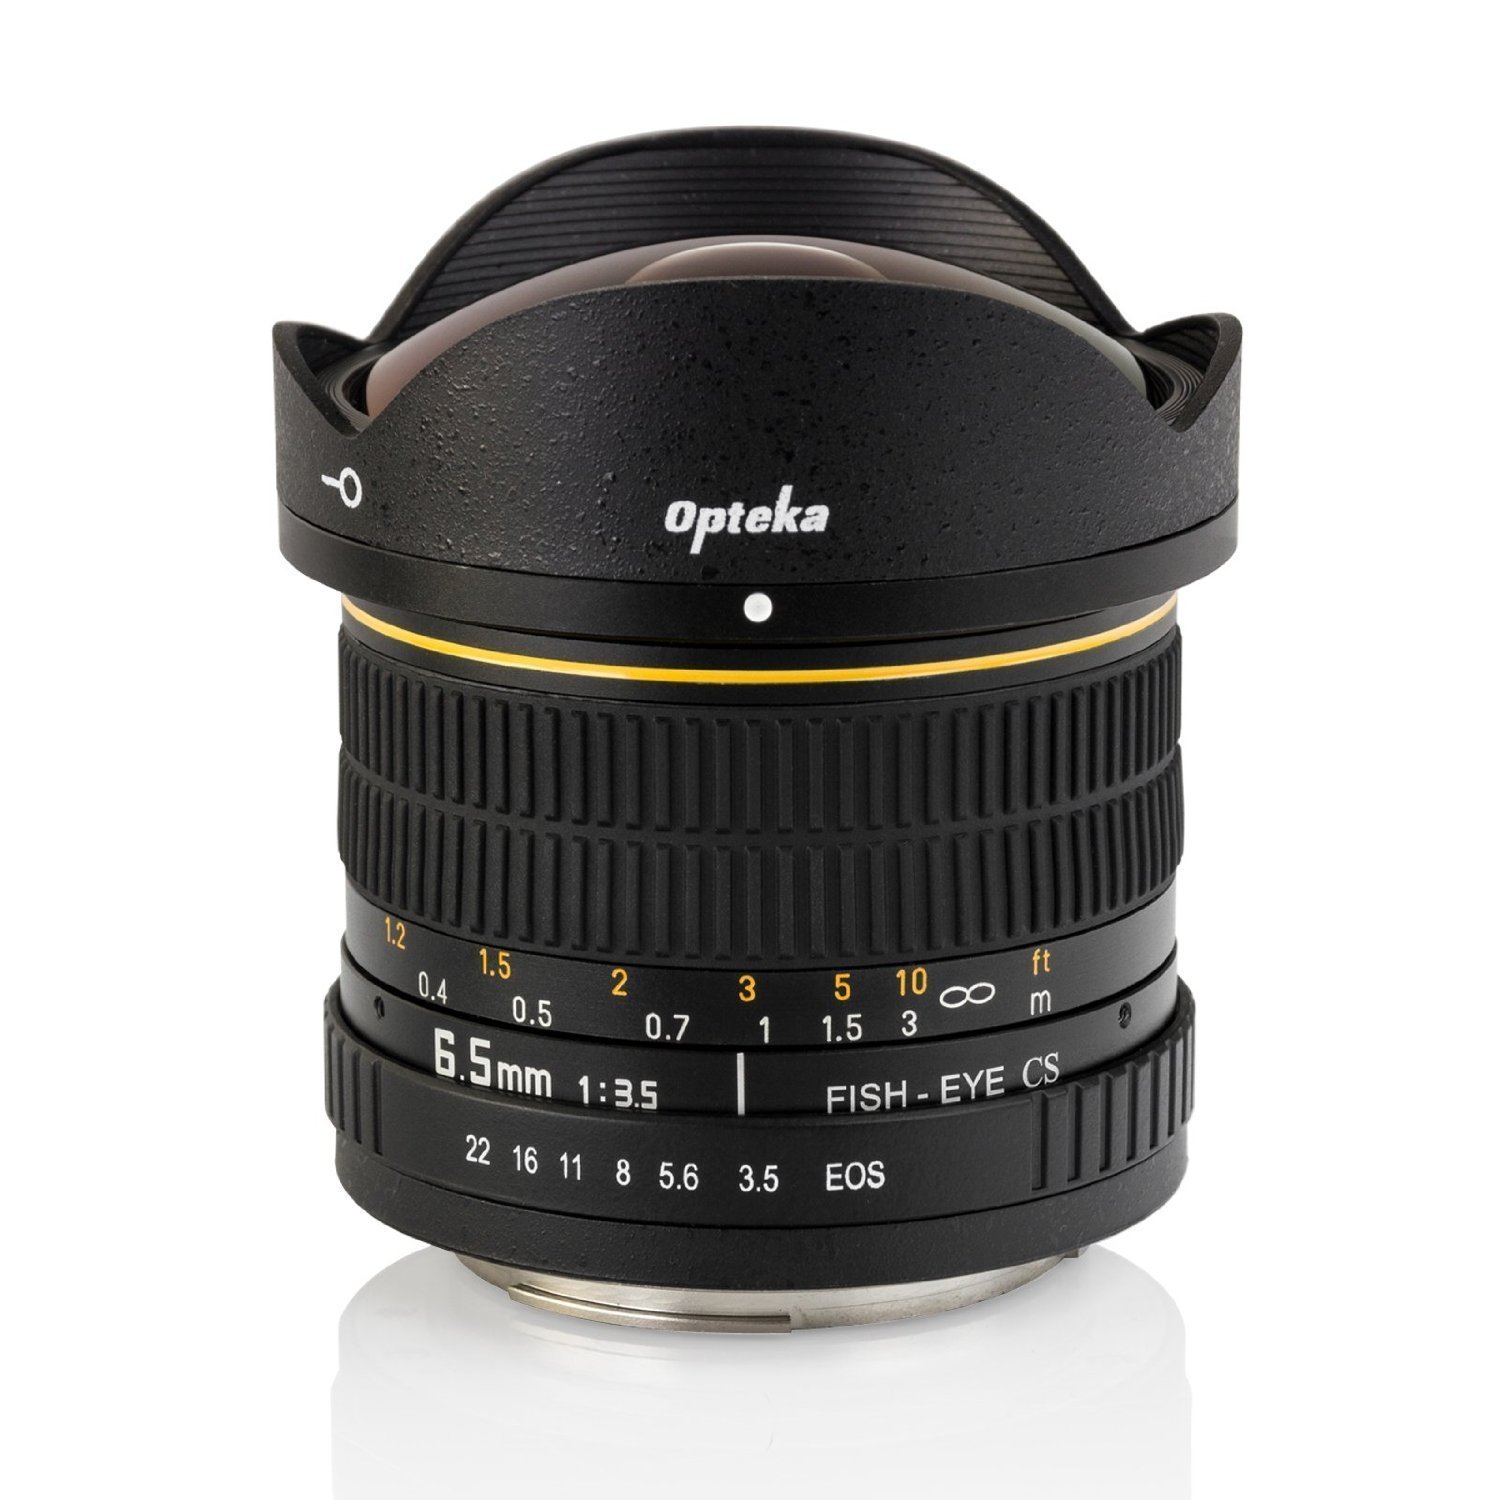 Opteka fisheye lens, specialized lens, best dslr lens, wide angle lens